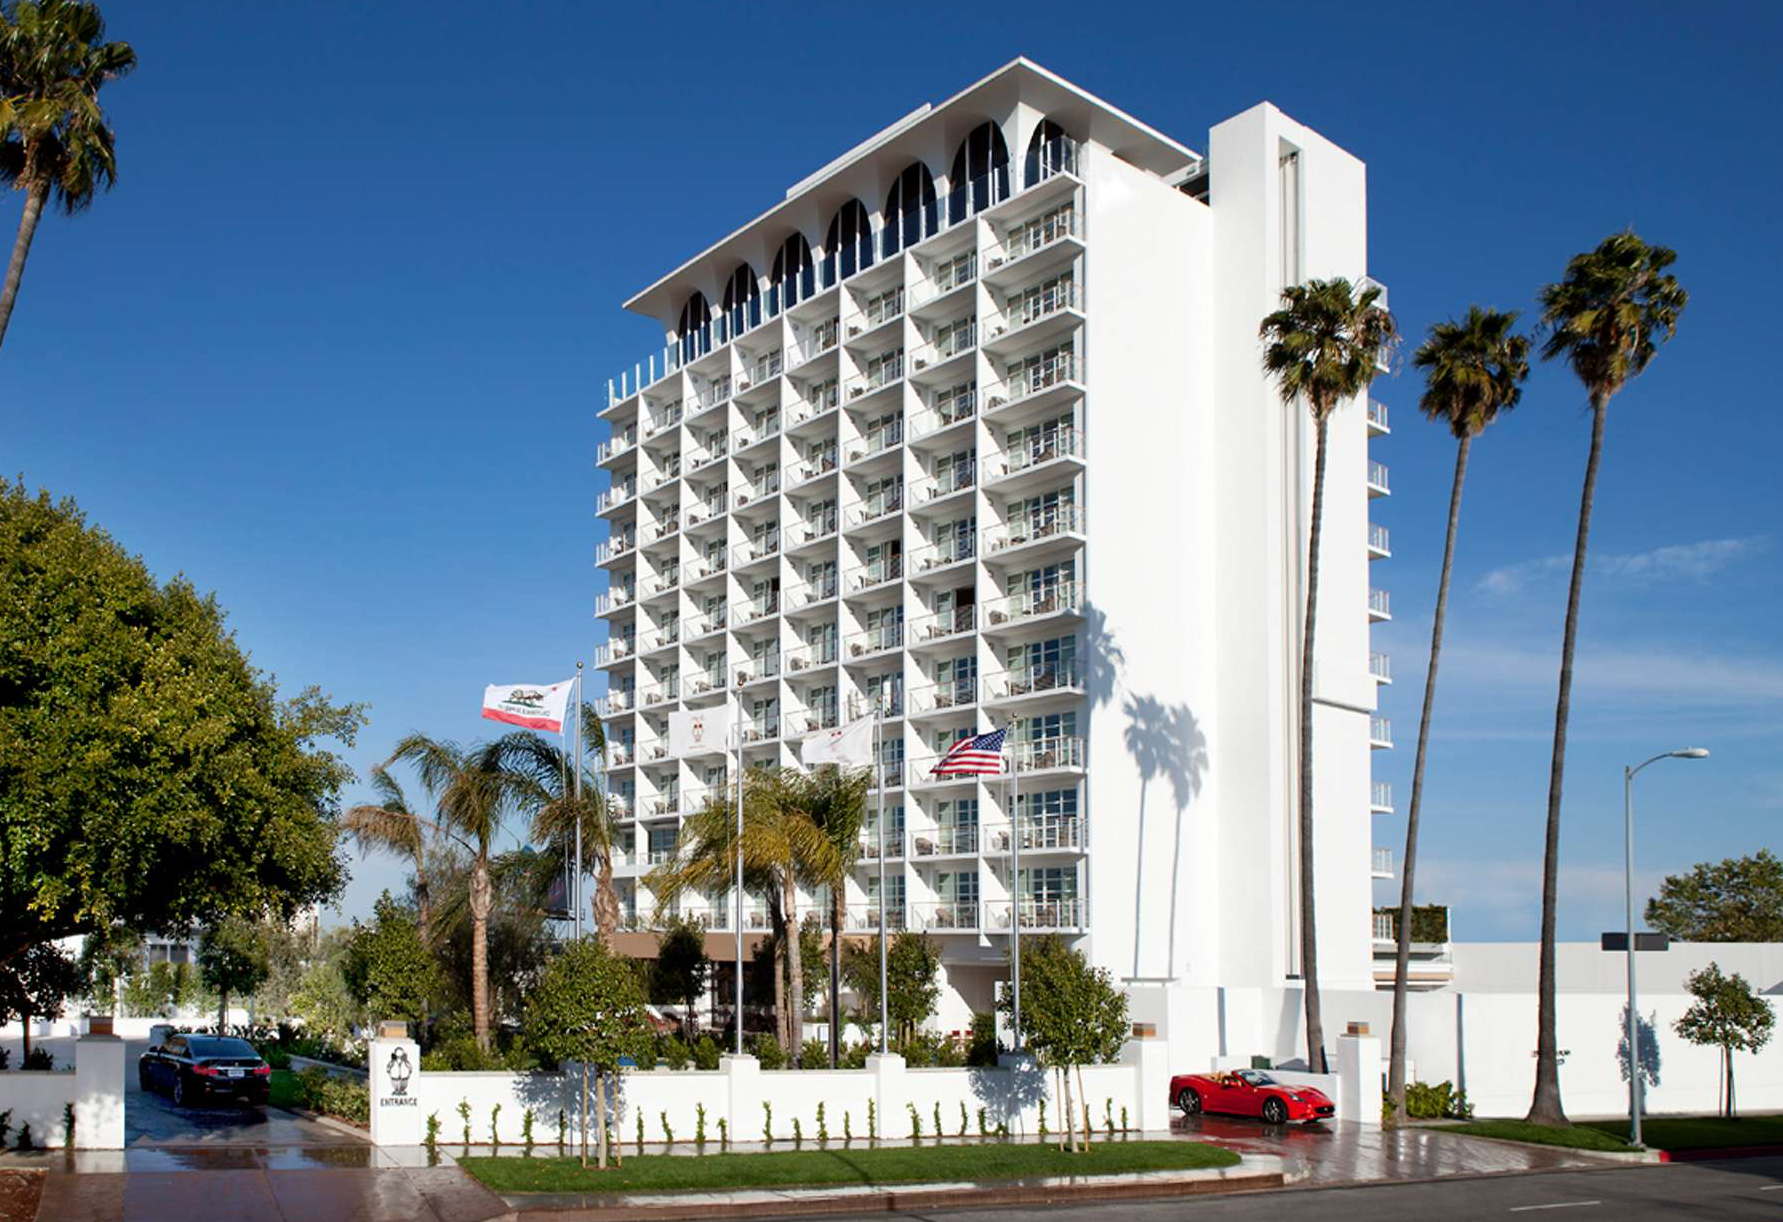 Braemar Hotels & Resorts Buys Mr. C Beverly Hills Hotel for $77.9 Million